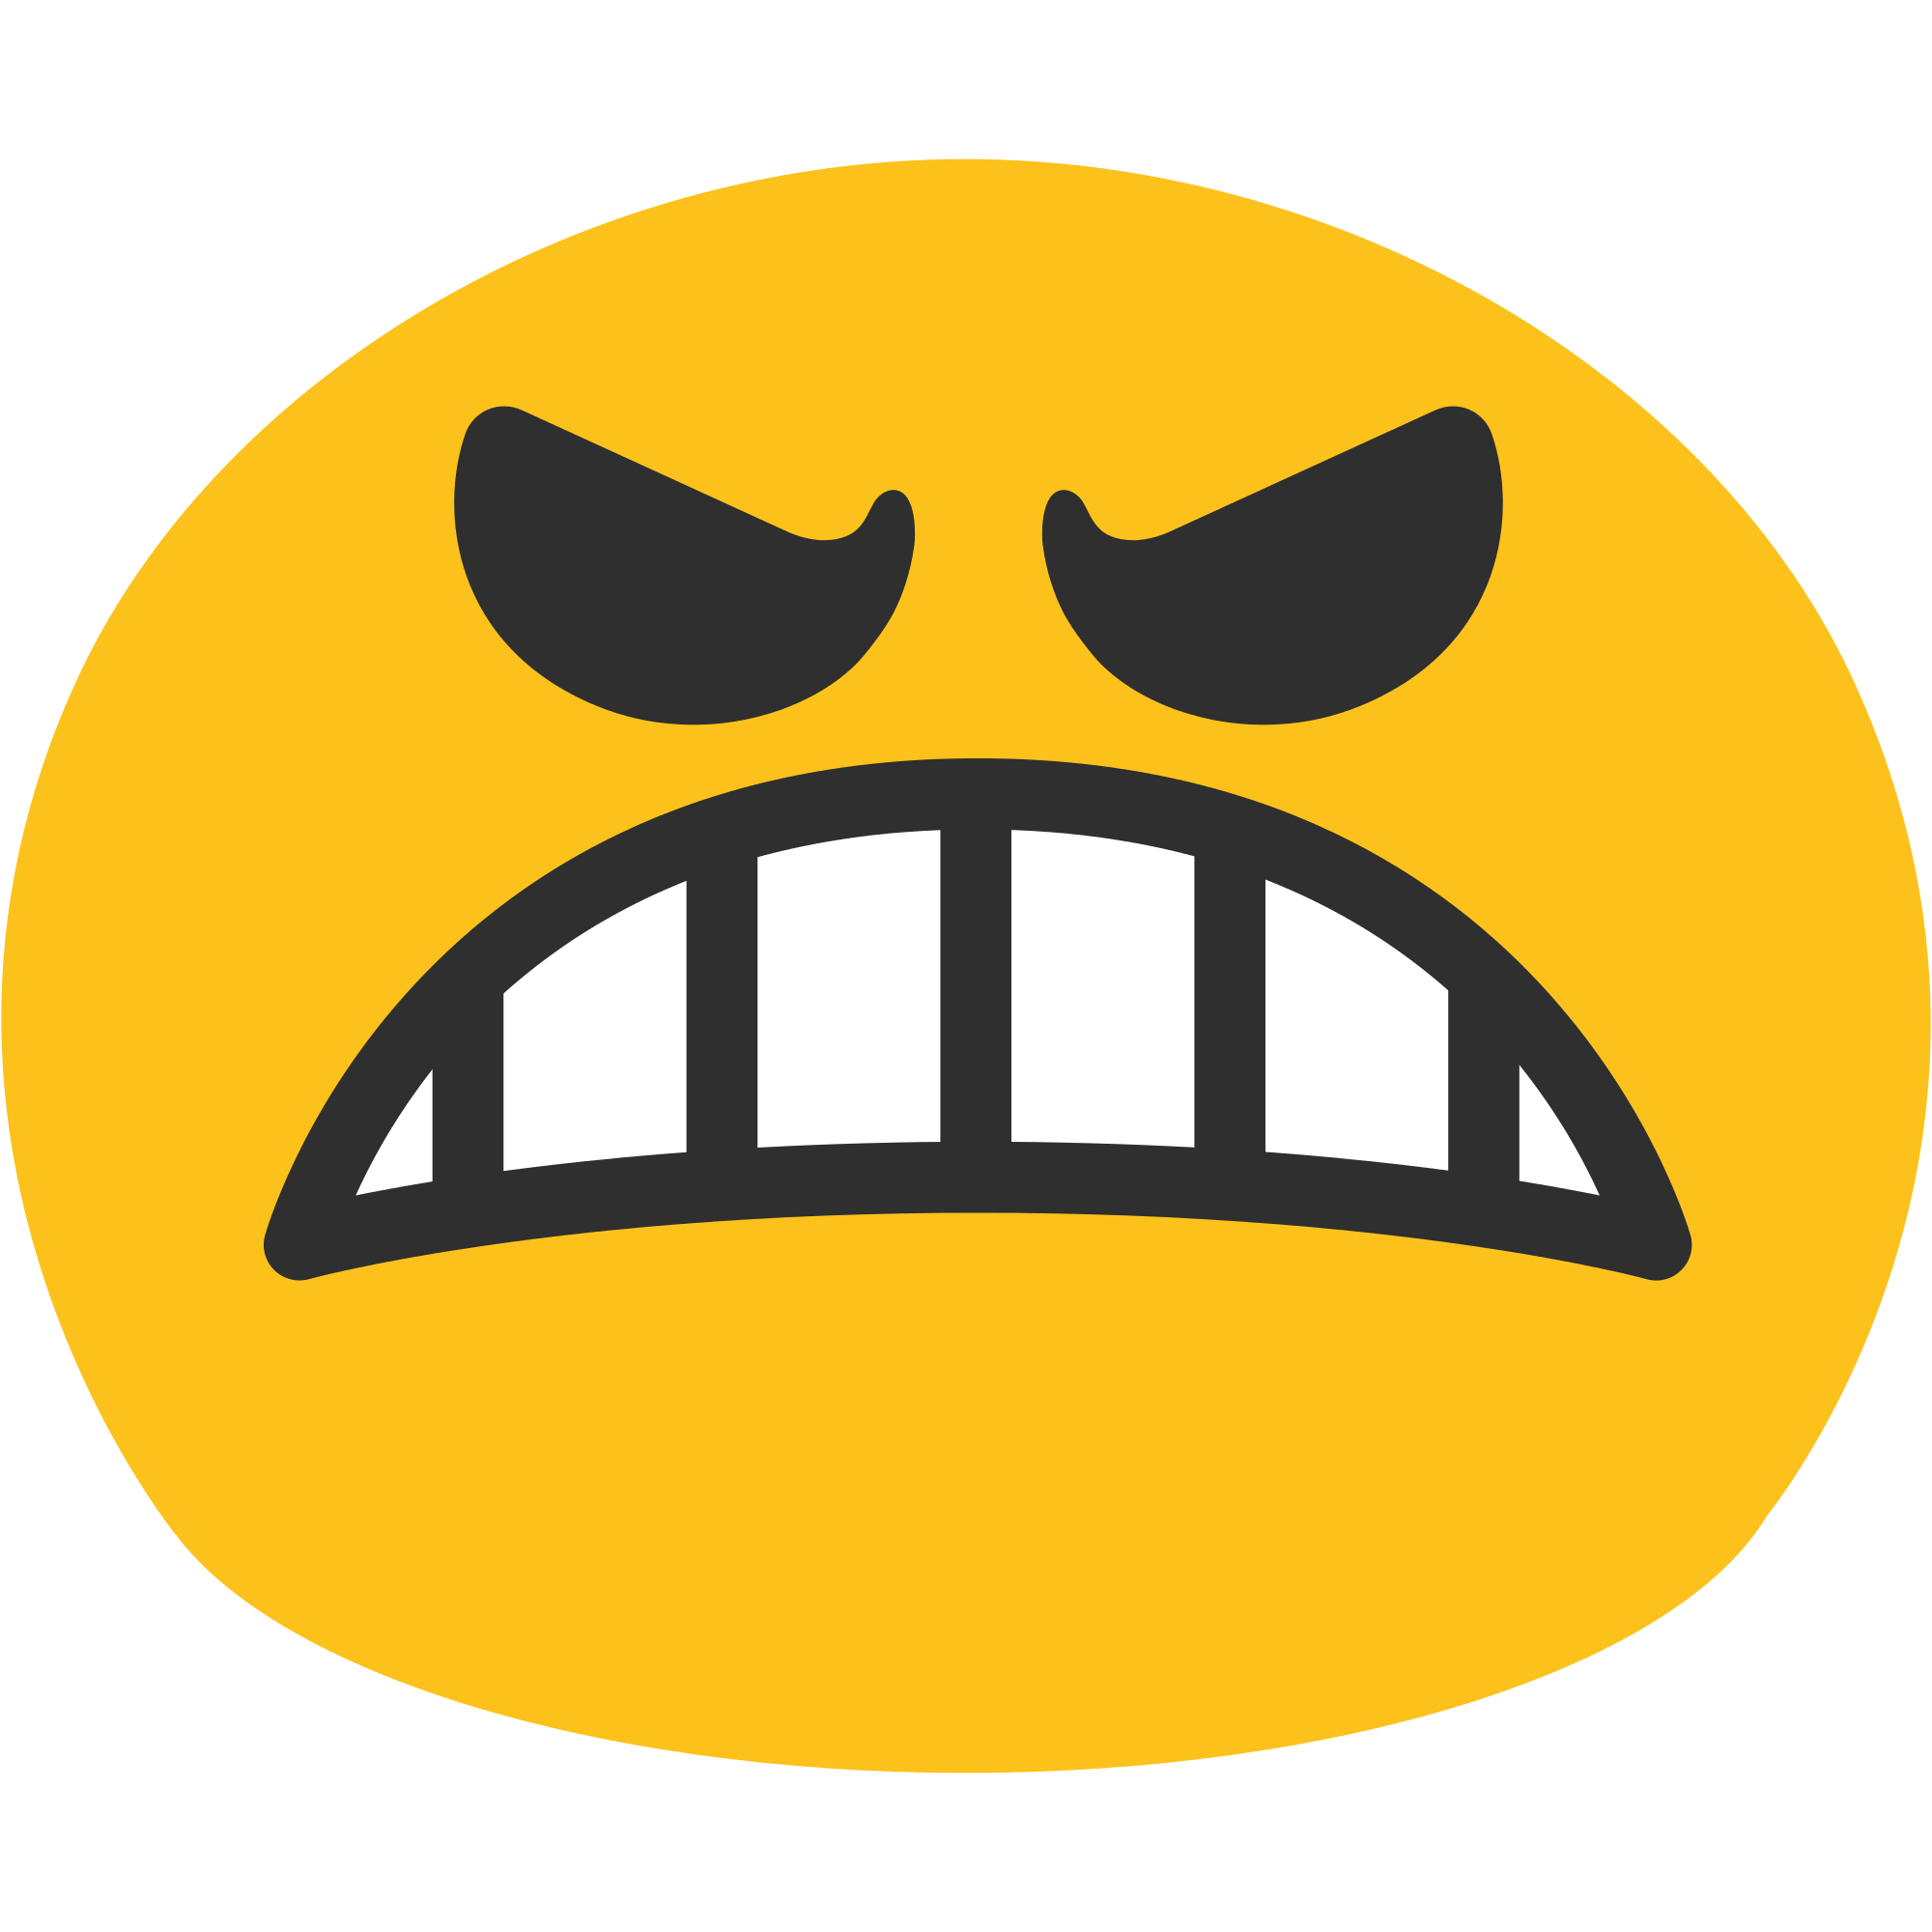 Download Angry Emoji Transparent Background HQ PNG Image FreePNGImg.